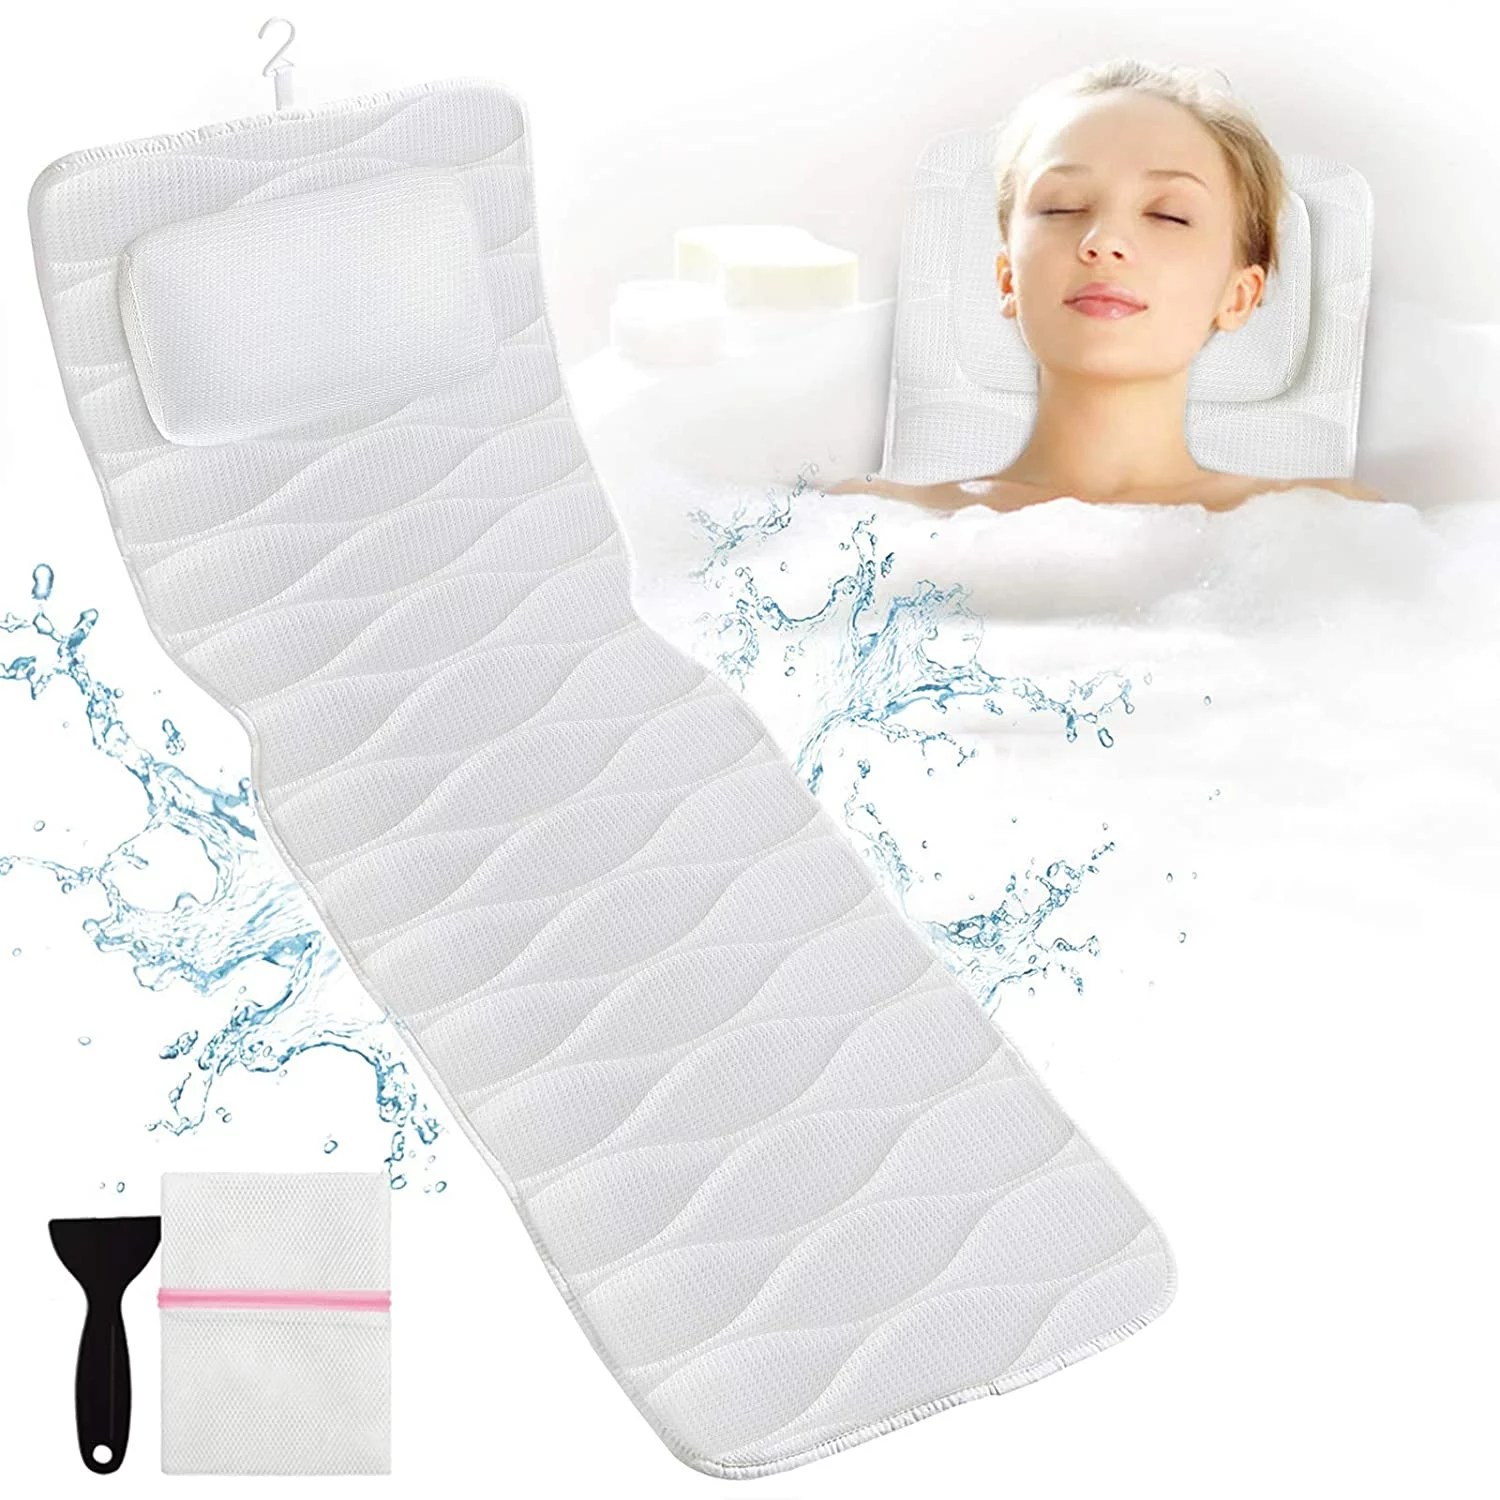 Bathtub Pillows Jacuzzi Mat, Large Spa Pillows, Premium With 6